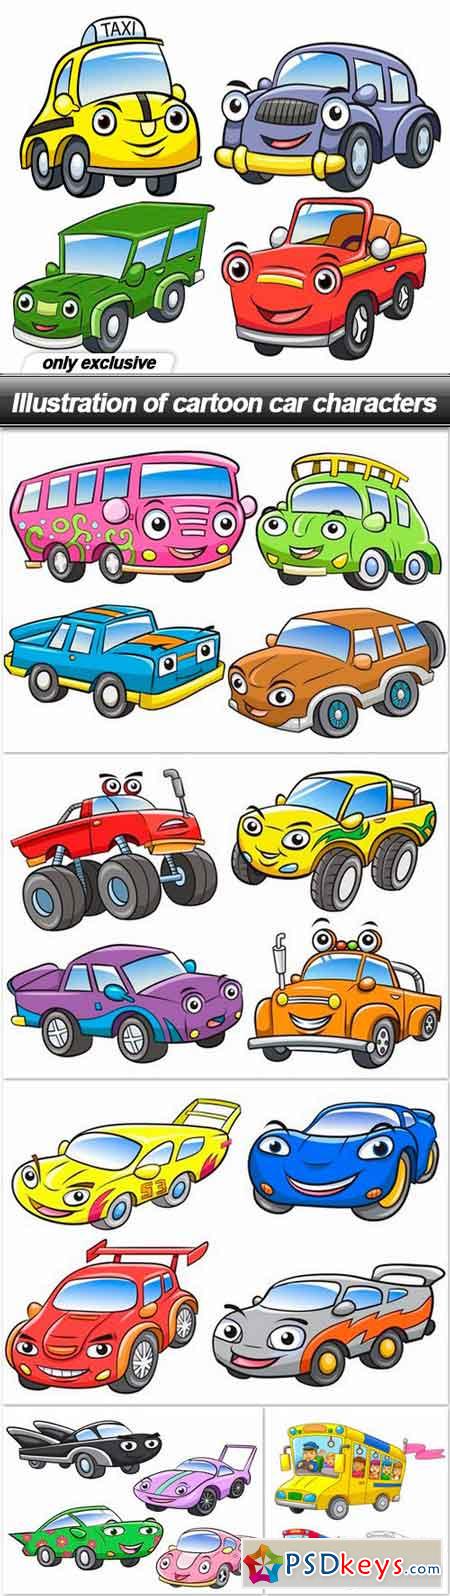 Illustration of cartoon car characters - 6 EPS